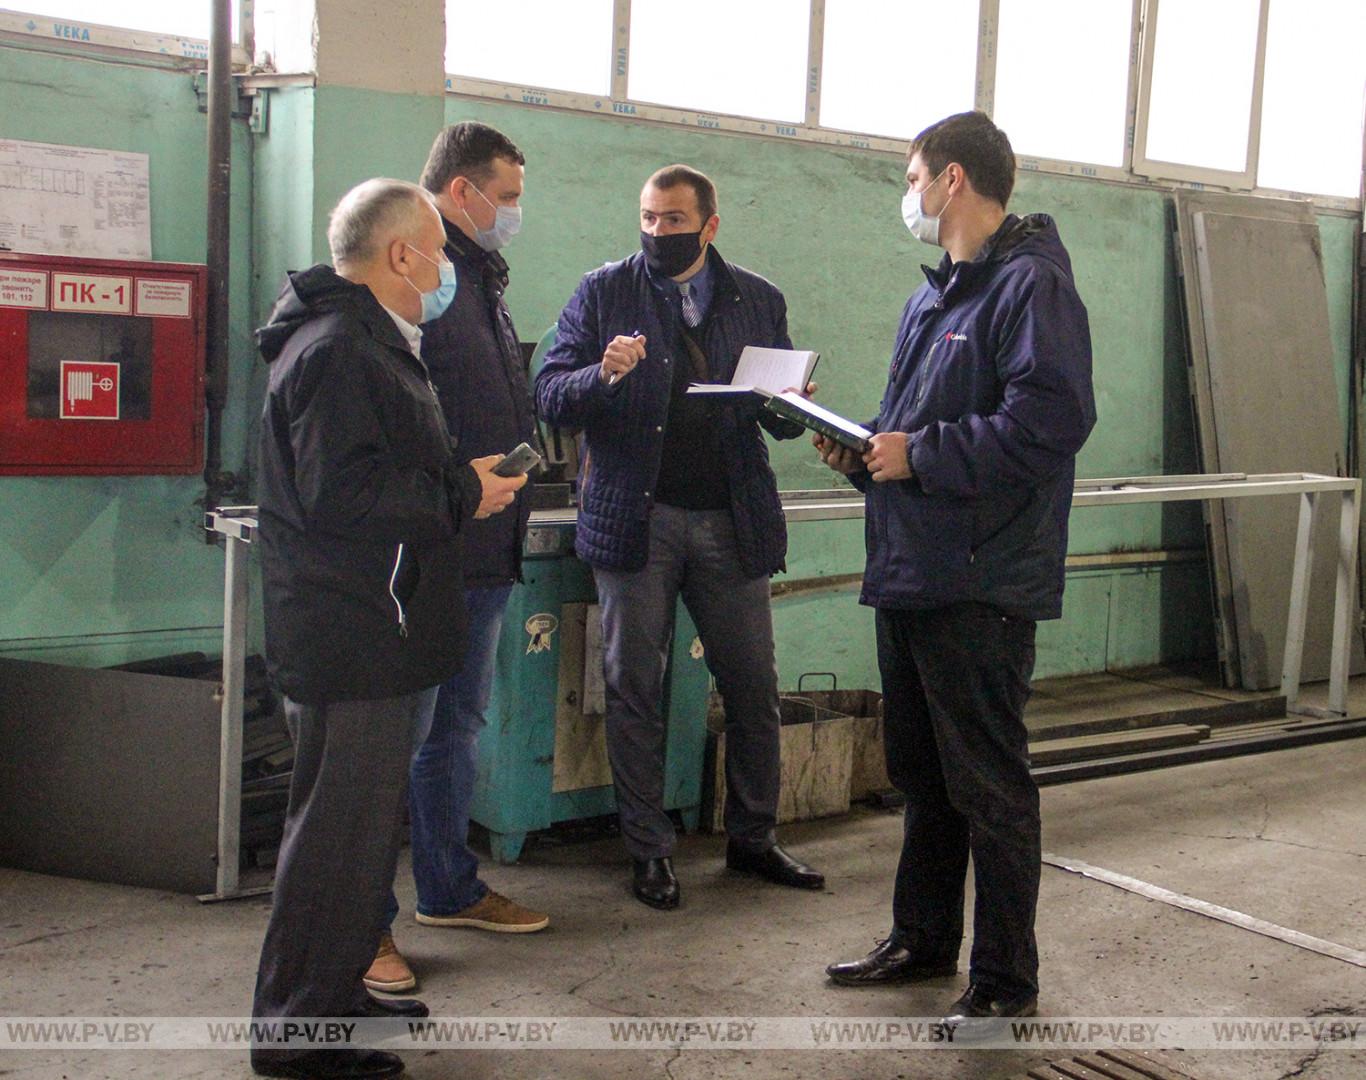 Техническая инспекция труда Федерации профсоюзов Беларуси посетила Пинск